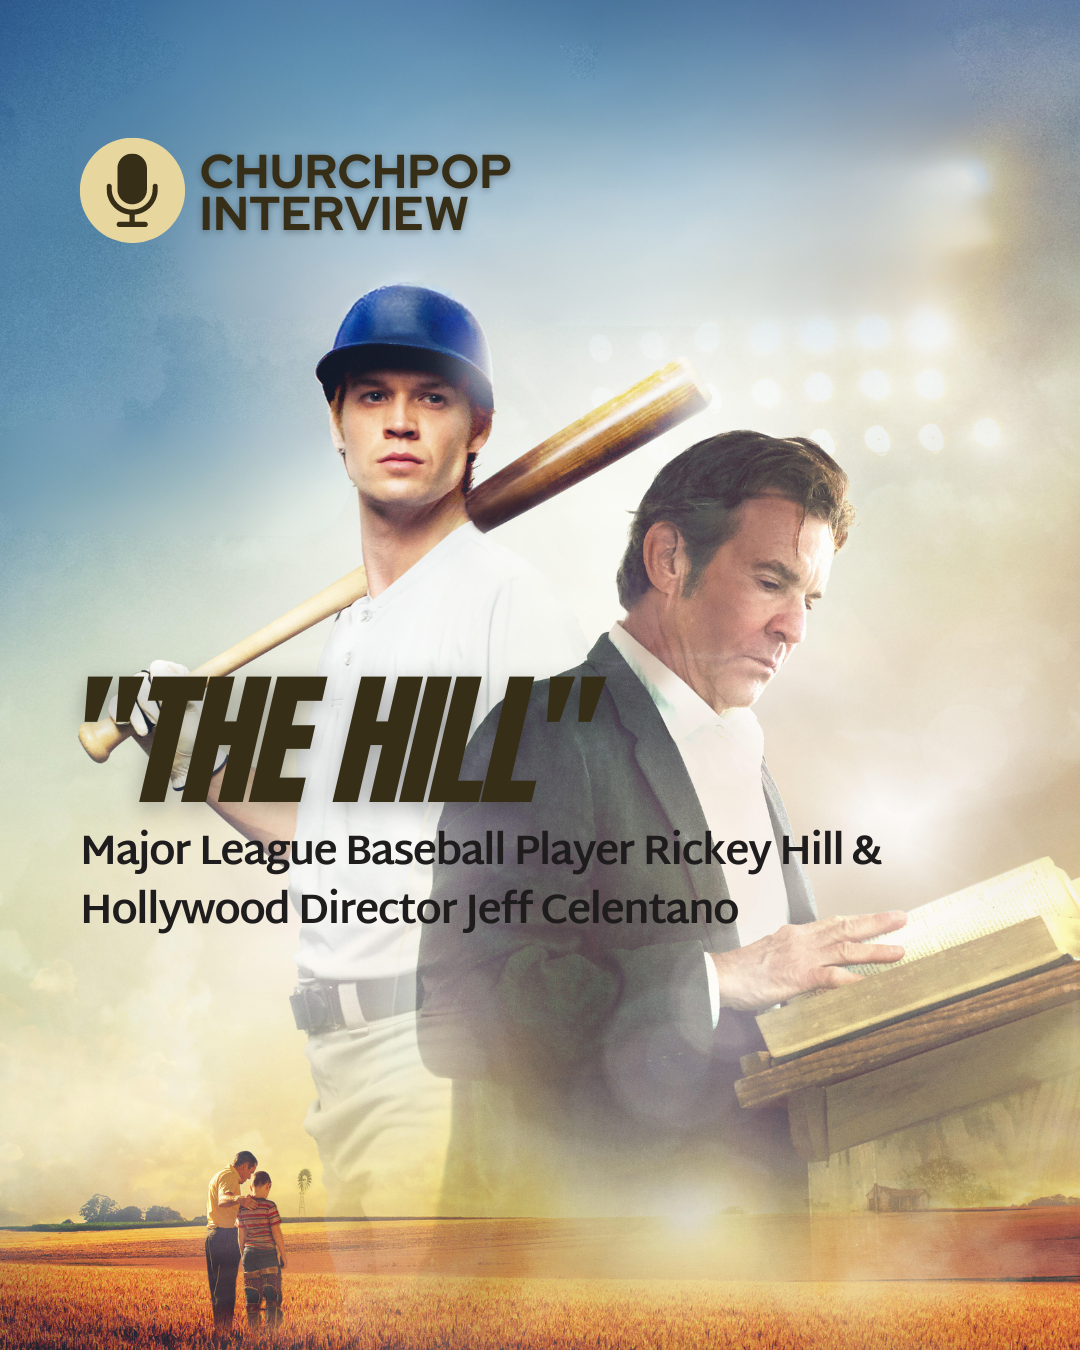 From Leg Braces to Major League Baseball: Film Tells Triumphant